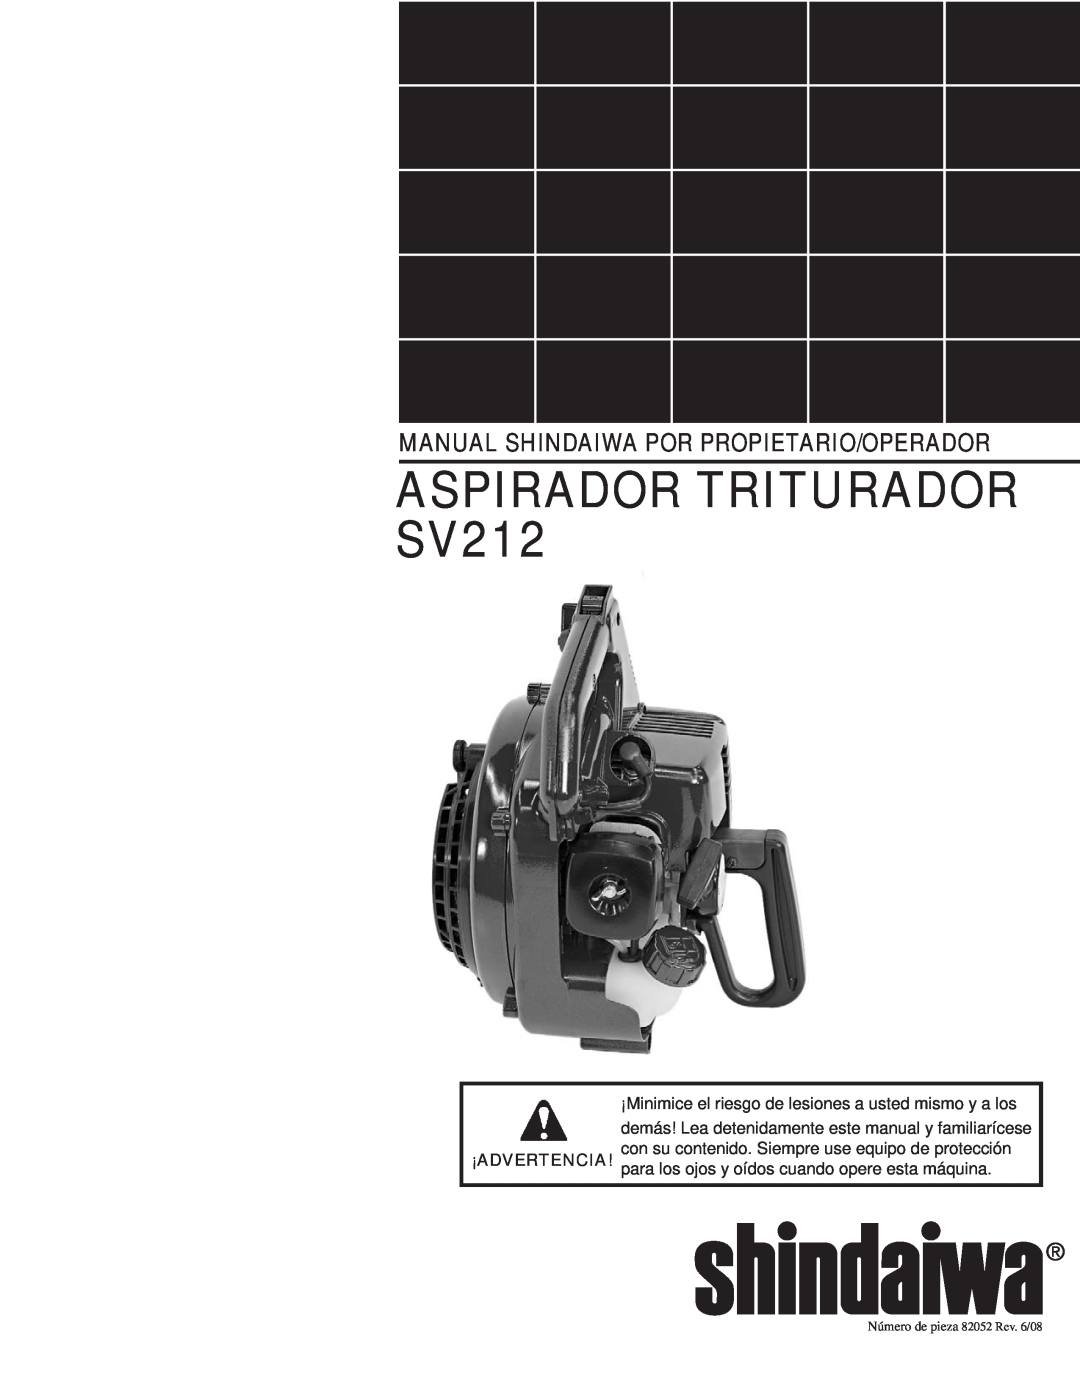 Shindaiwa 82052 manual ASPIRADOR TRITURADOR SV212, Manual Shindaiwa POR Propietario/Operador 